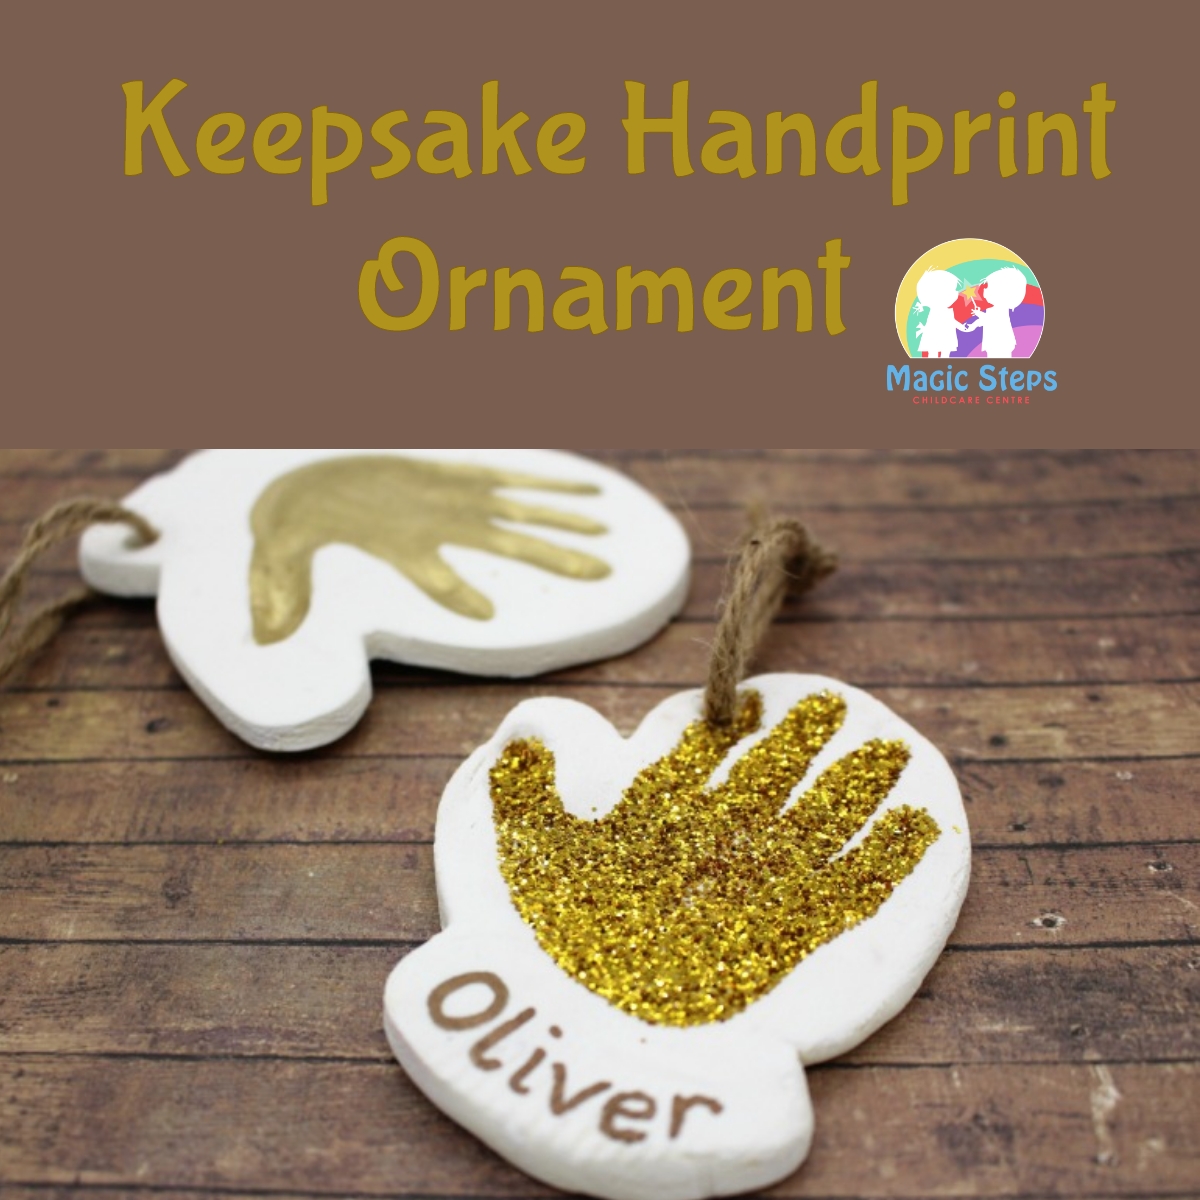 Keepsake Handprint Ornament- Thursday 2nd December